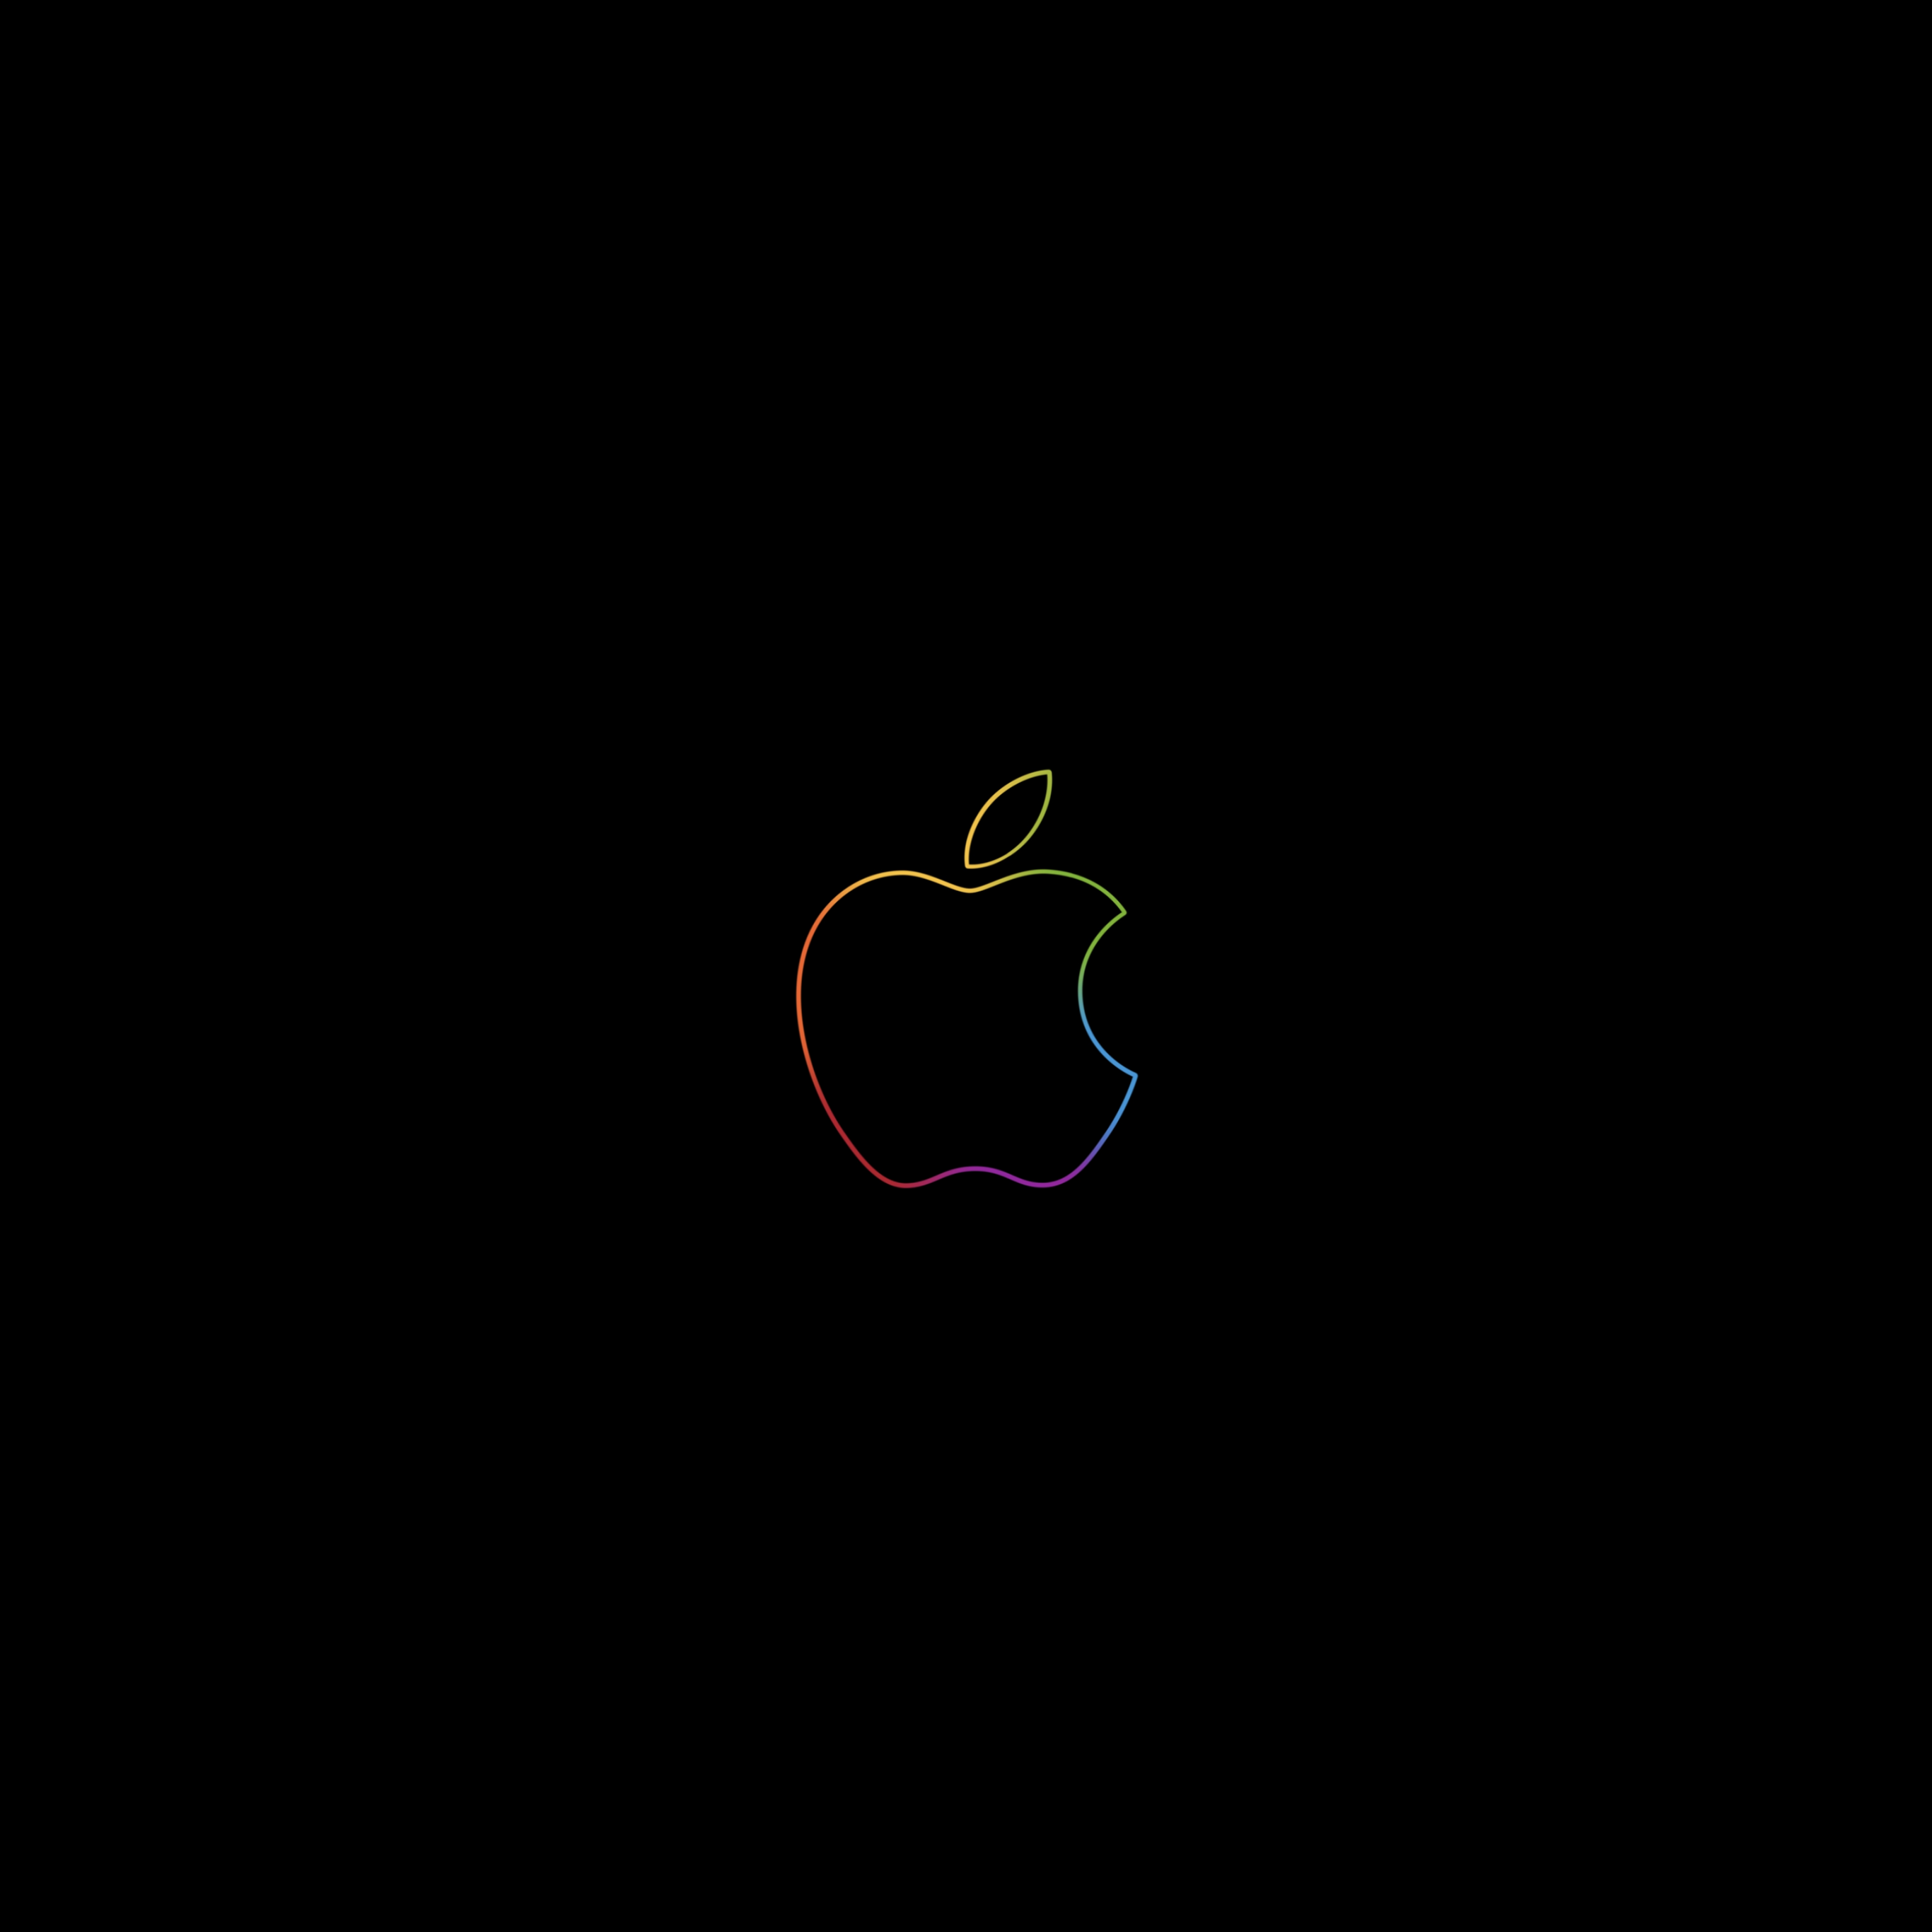 Logo Apple 4k Wallpapers - Wallpaper Cave